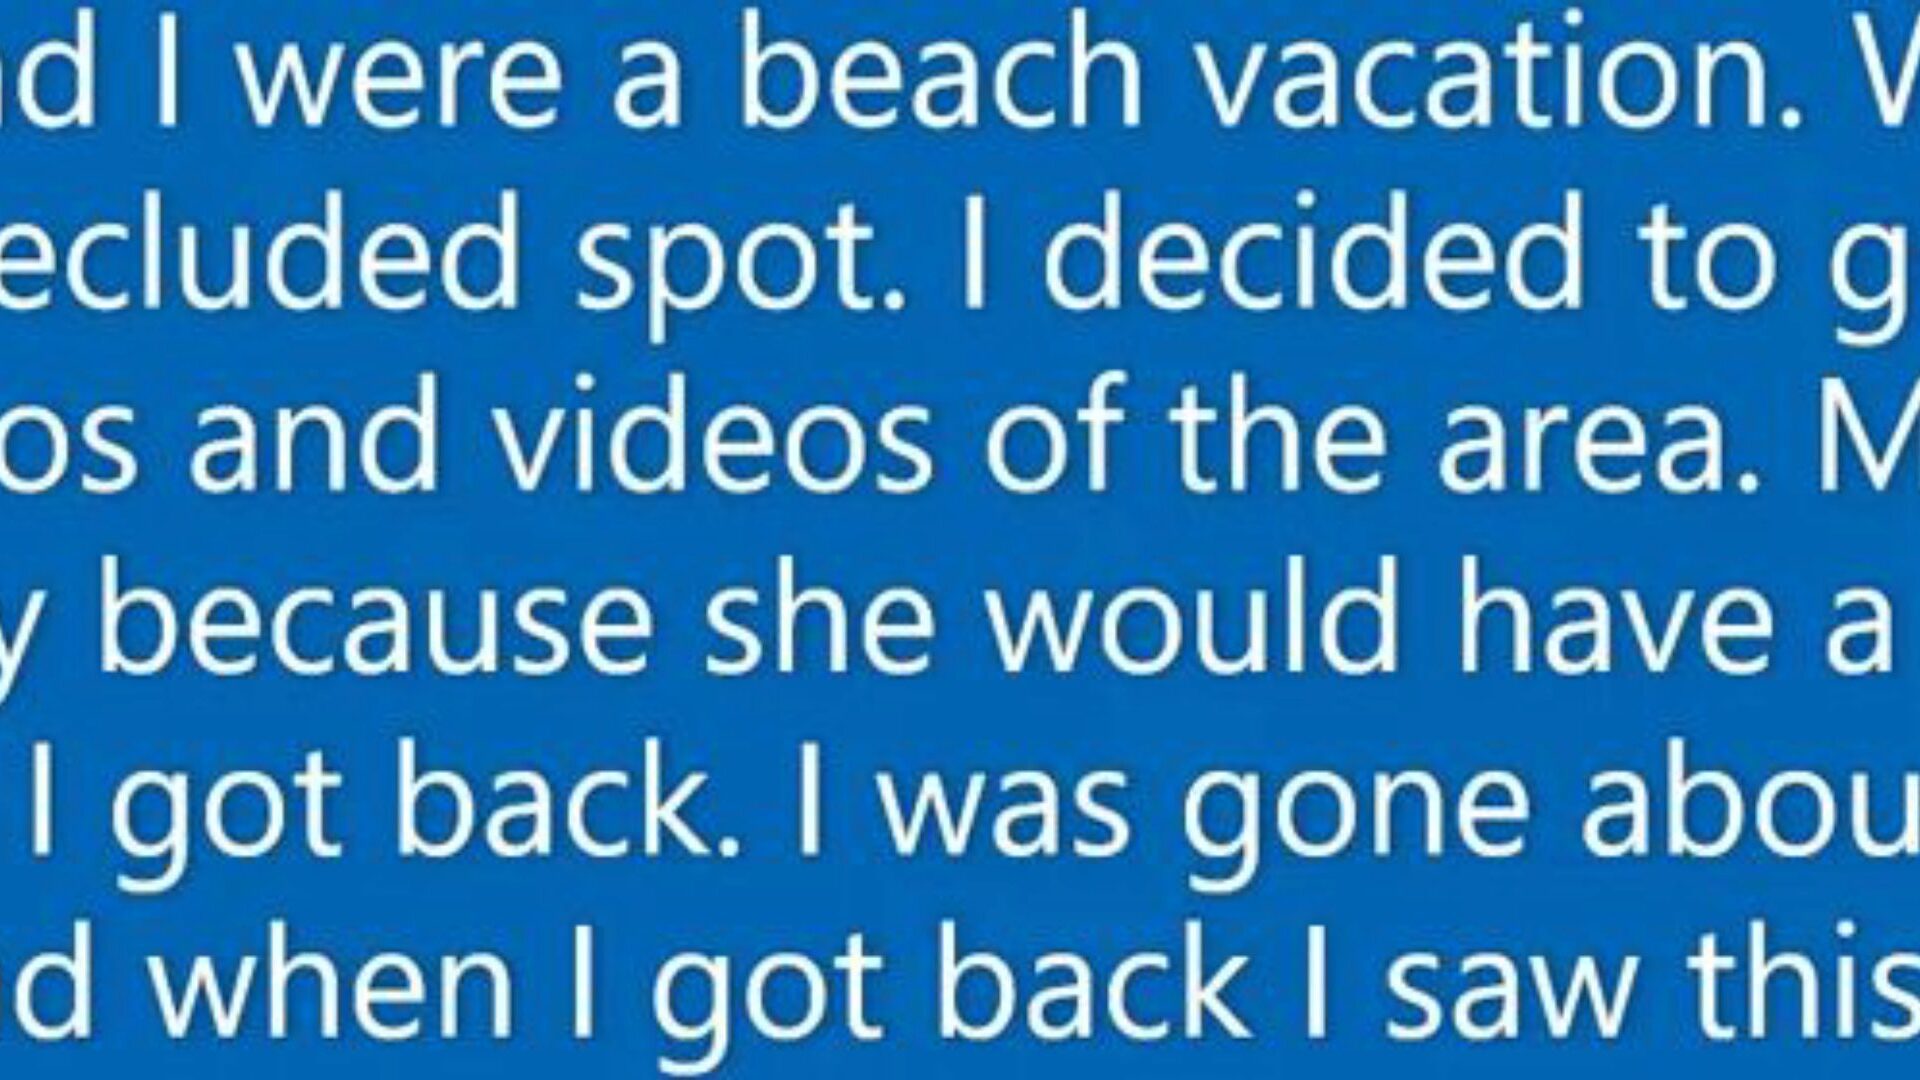 Wife inhales stranger's rod on beach holiday